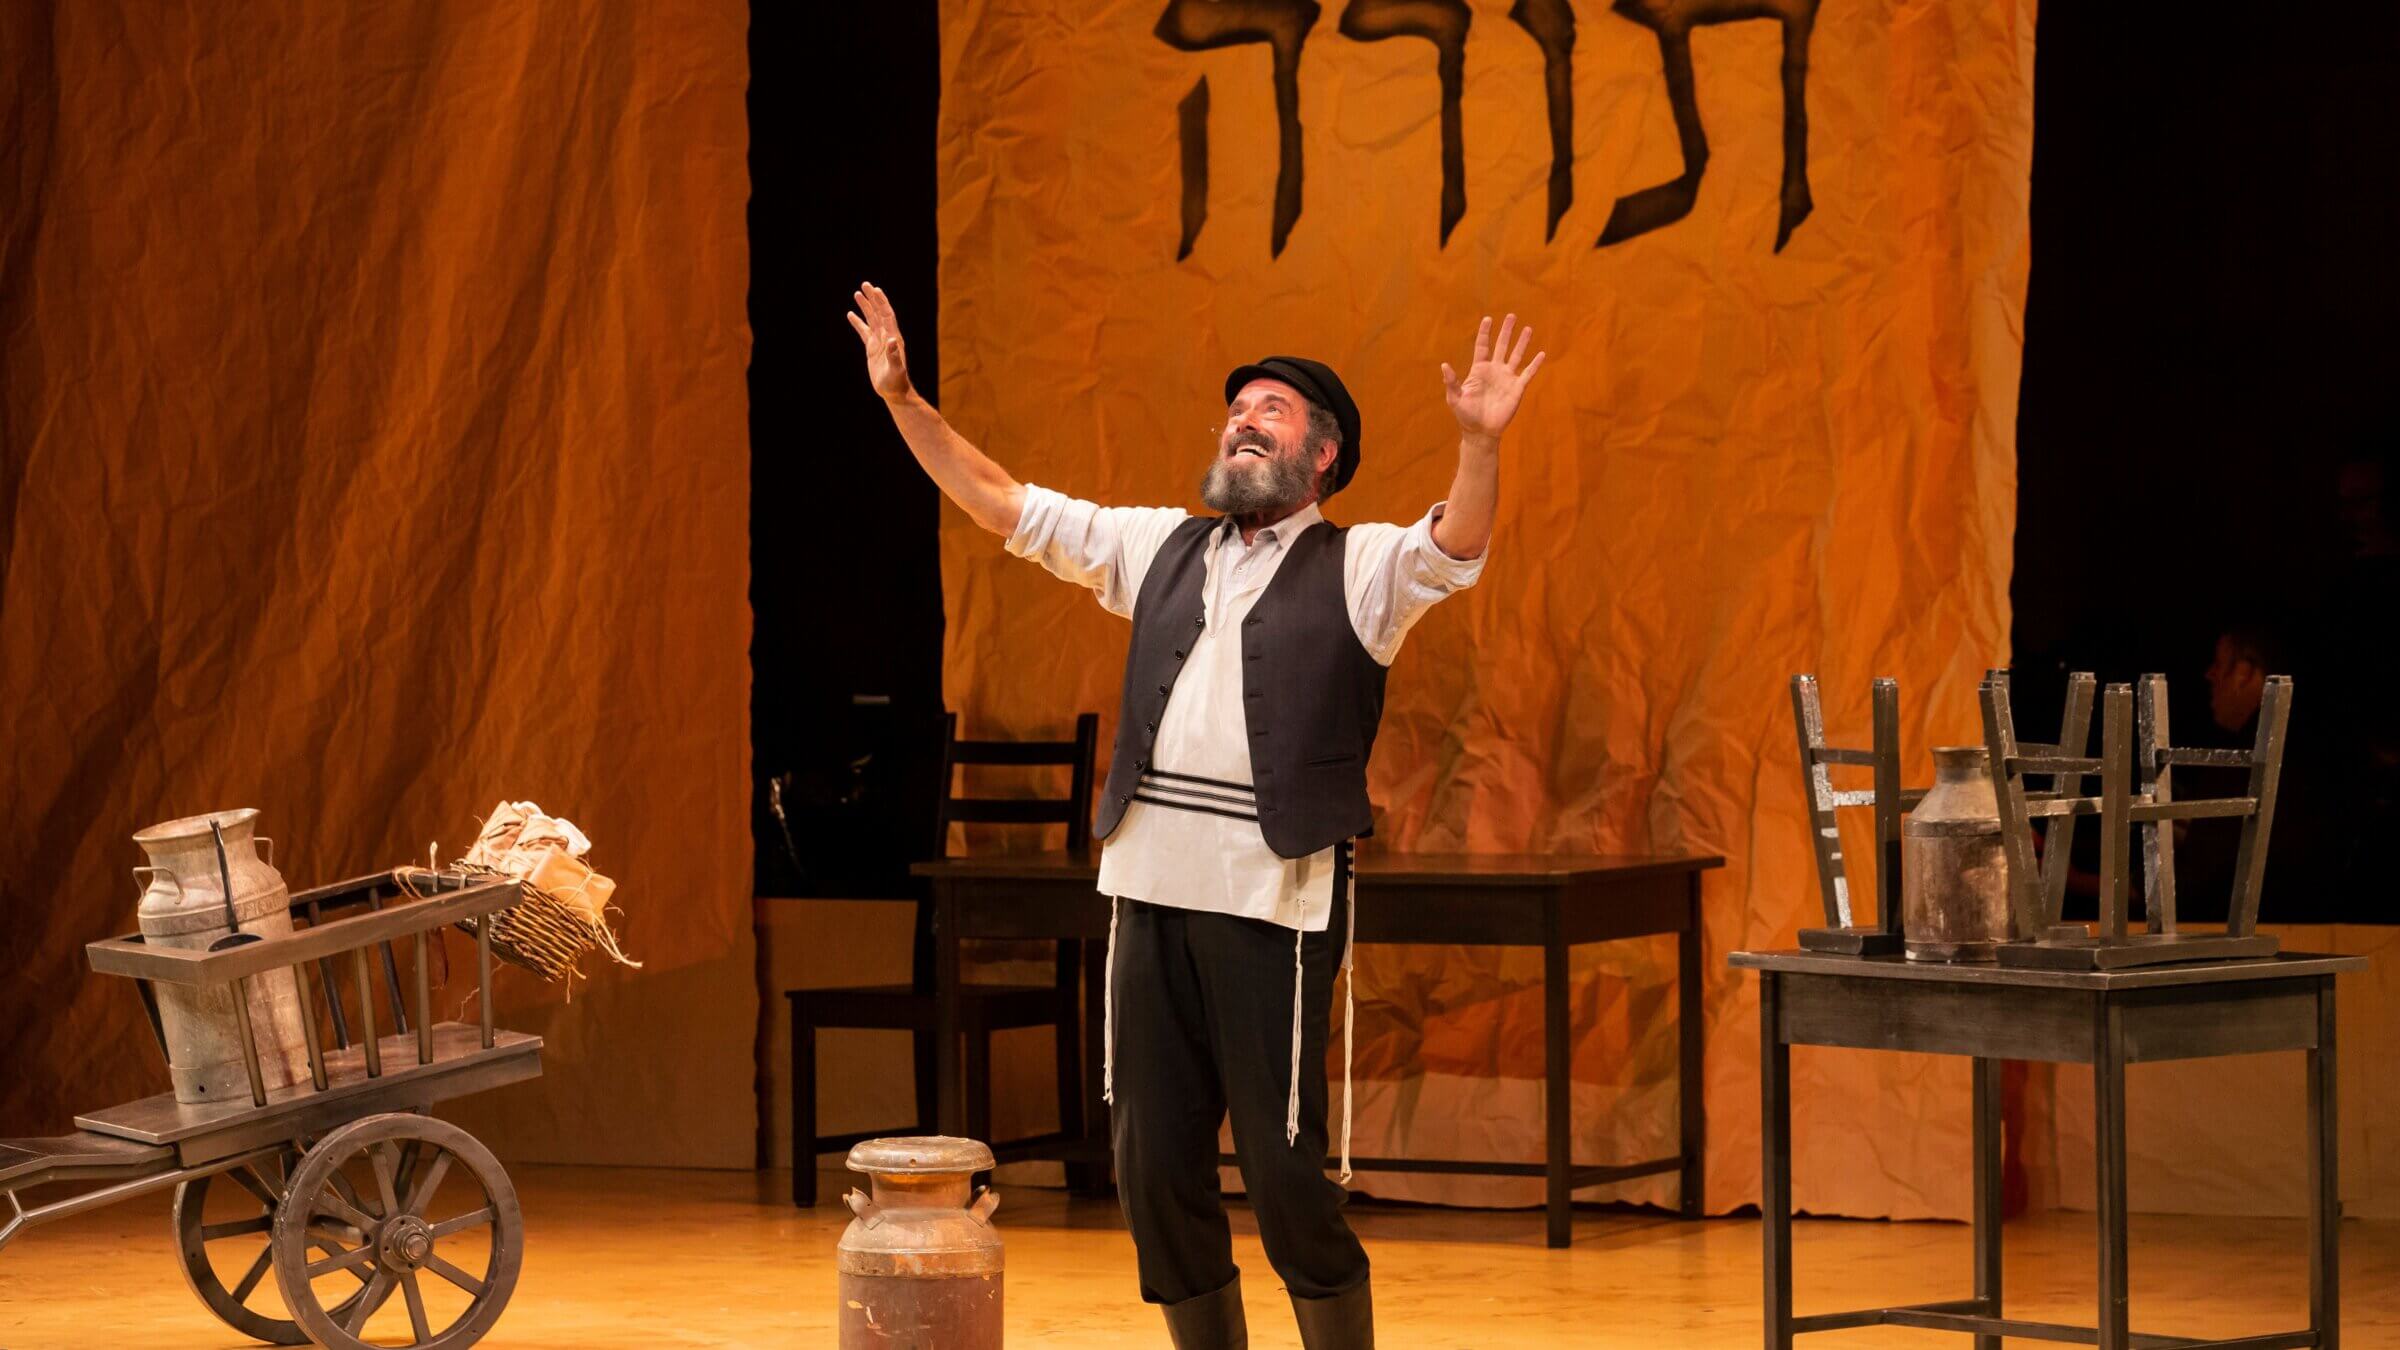 Steven Skybell as Tevye in the Folksbiene production of "Fiddler on the Roof" in Yiddish.